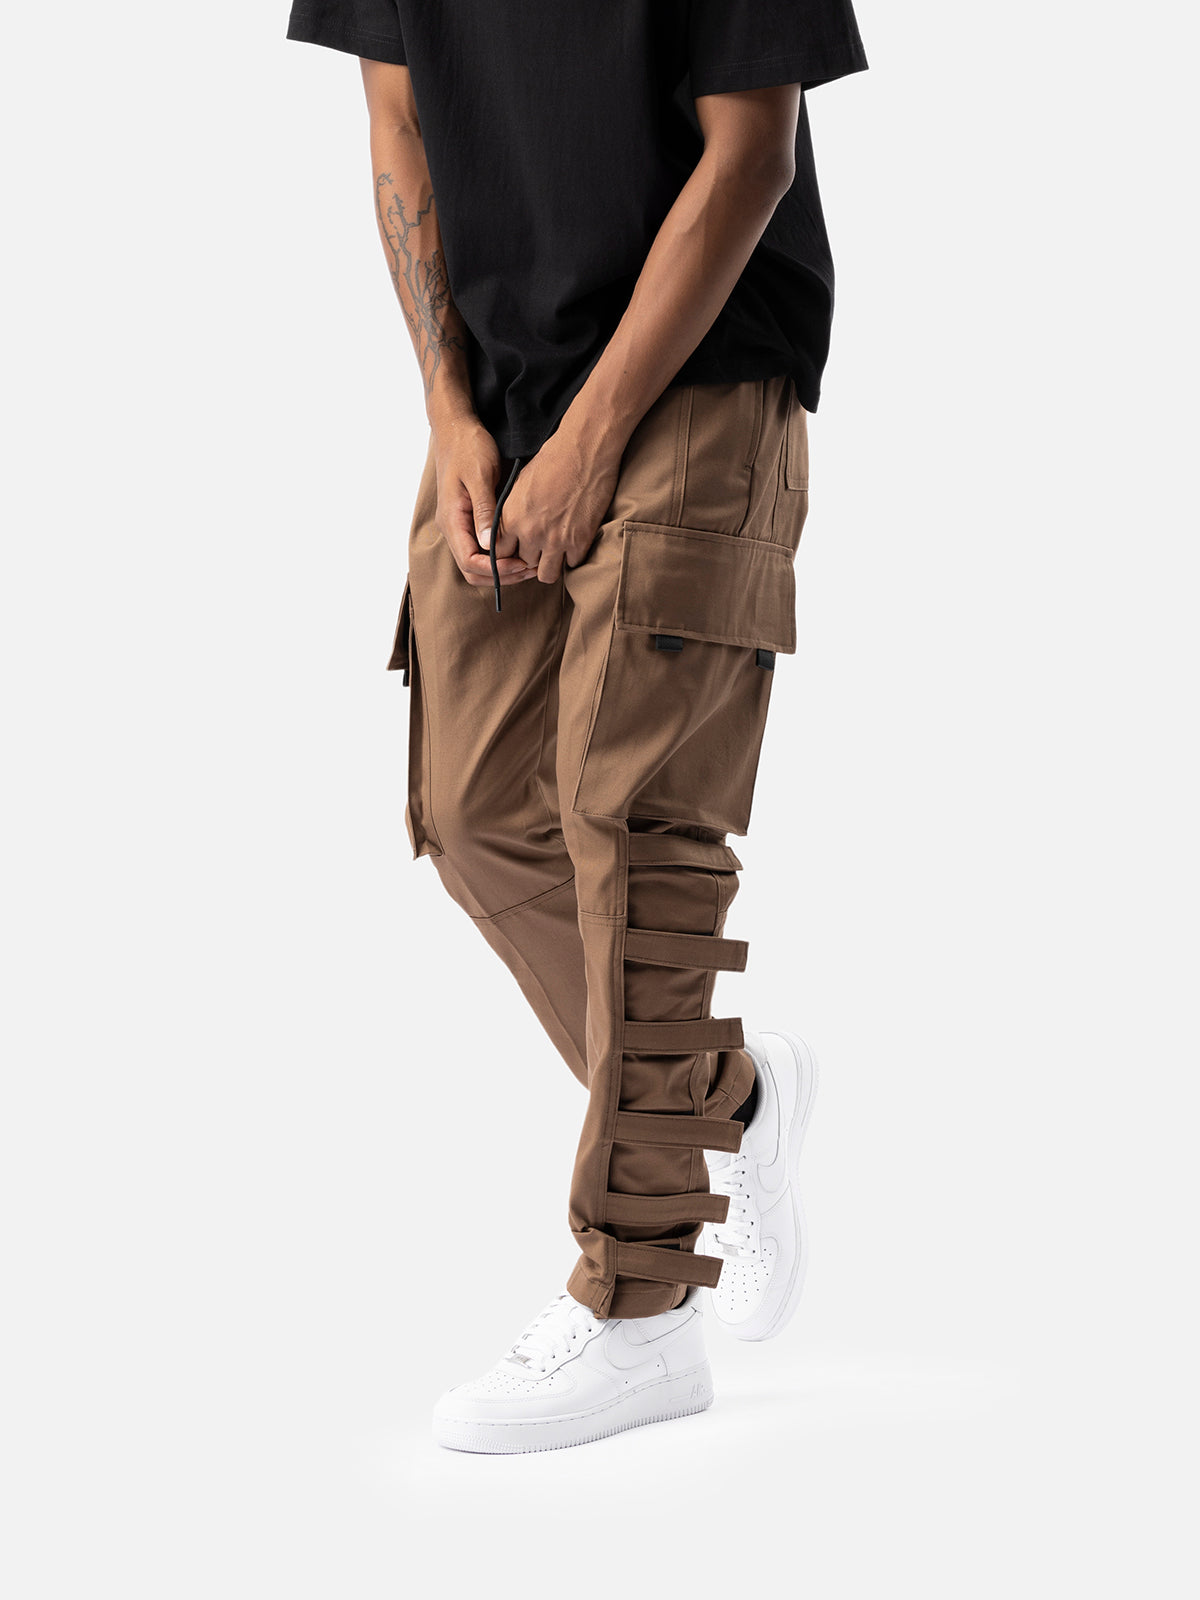 NOBO No Boundaries cargo jogger pants men's large brown Flex stretch | eBay